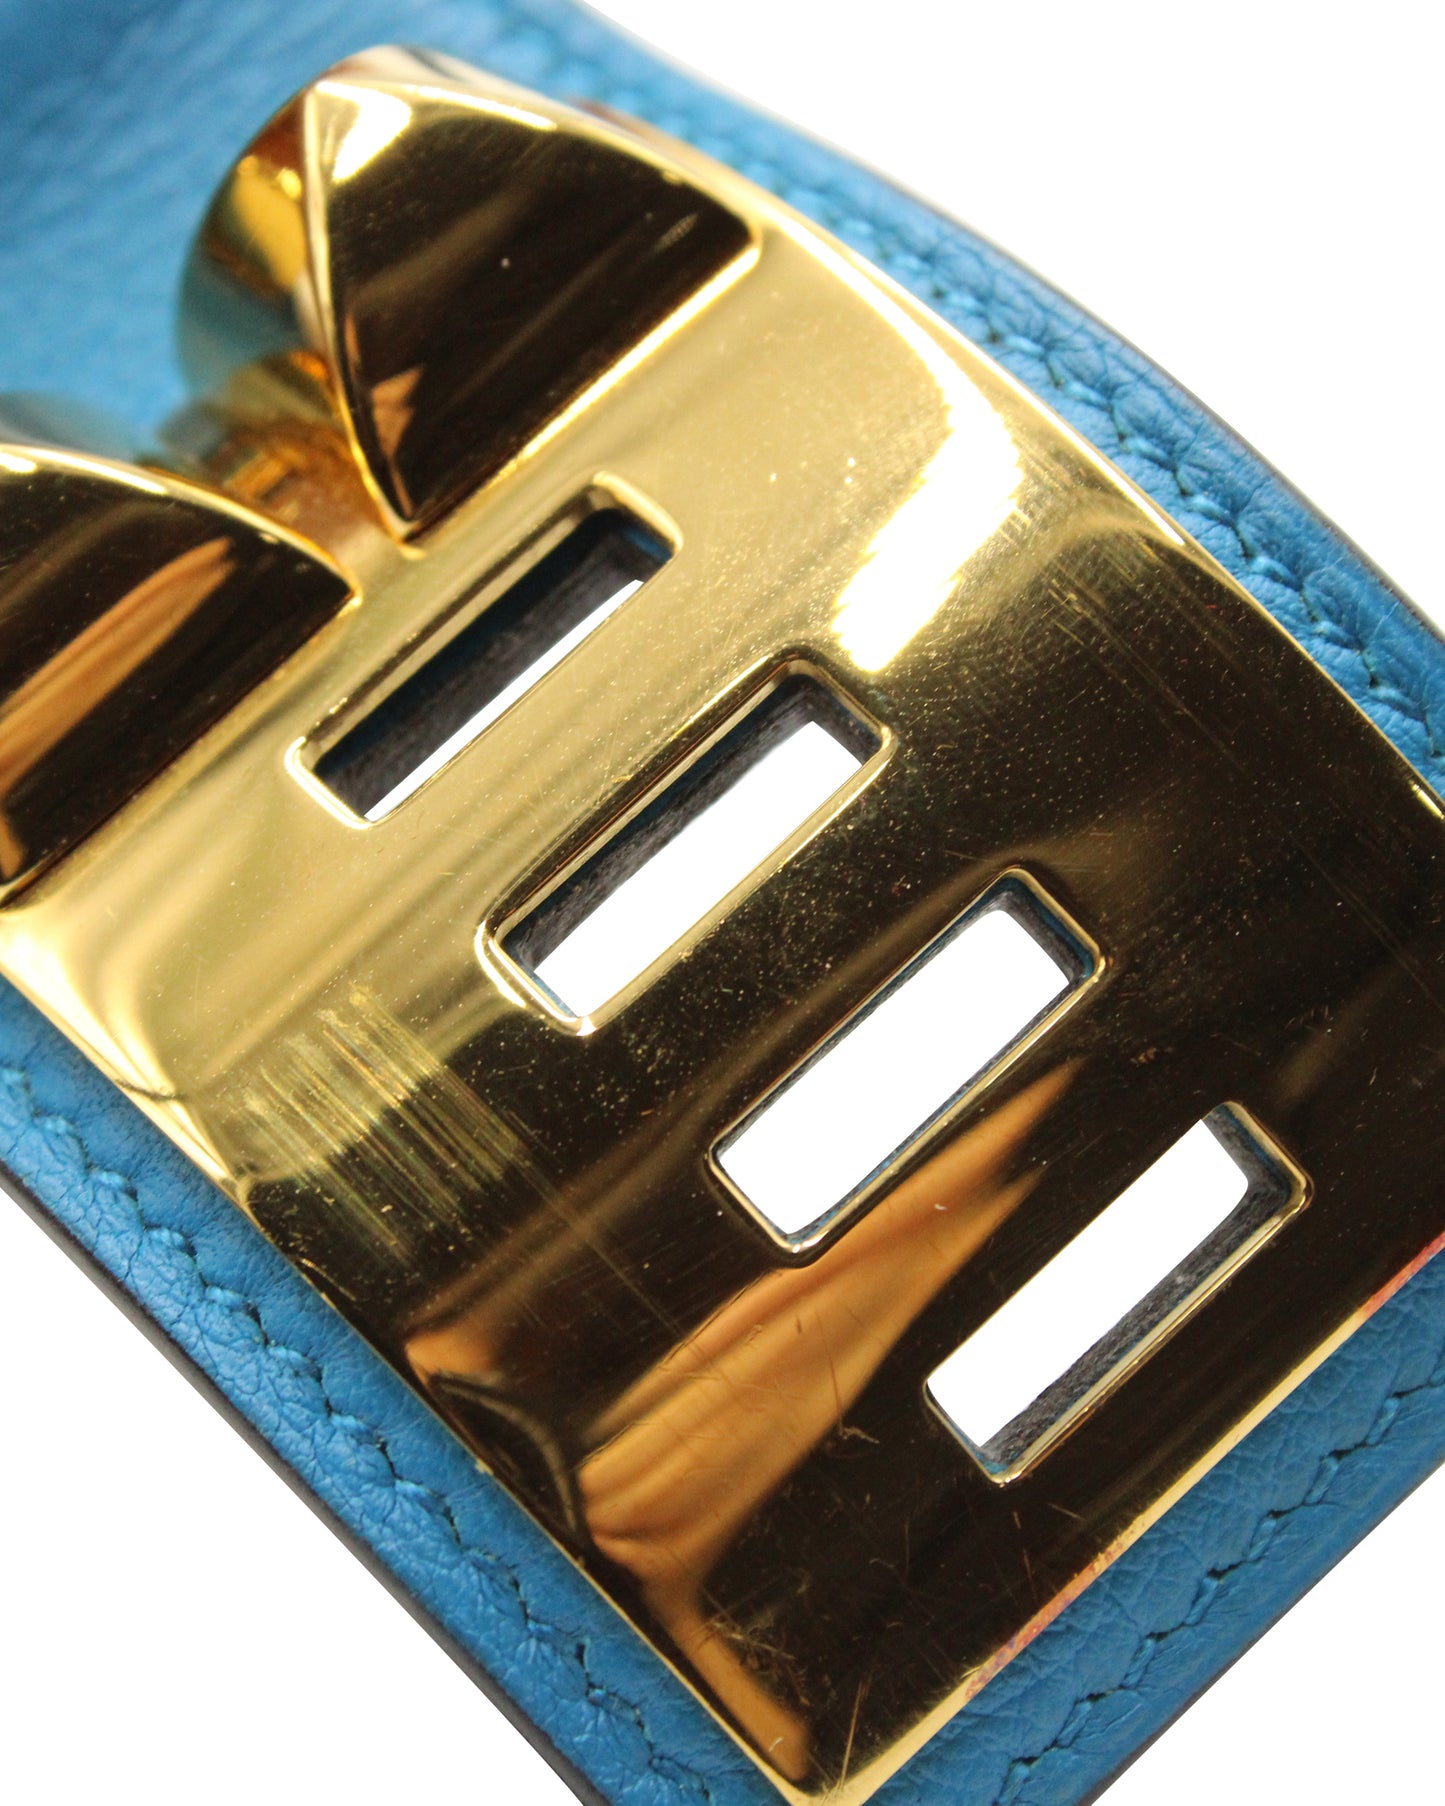 Collier de Chien Bracelet in Bleu Izmir Swift Leather with Gold Hardware